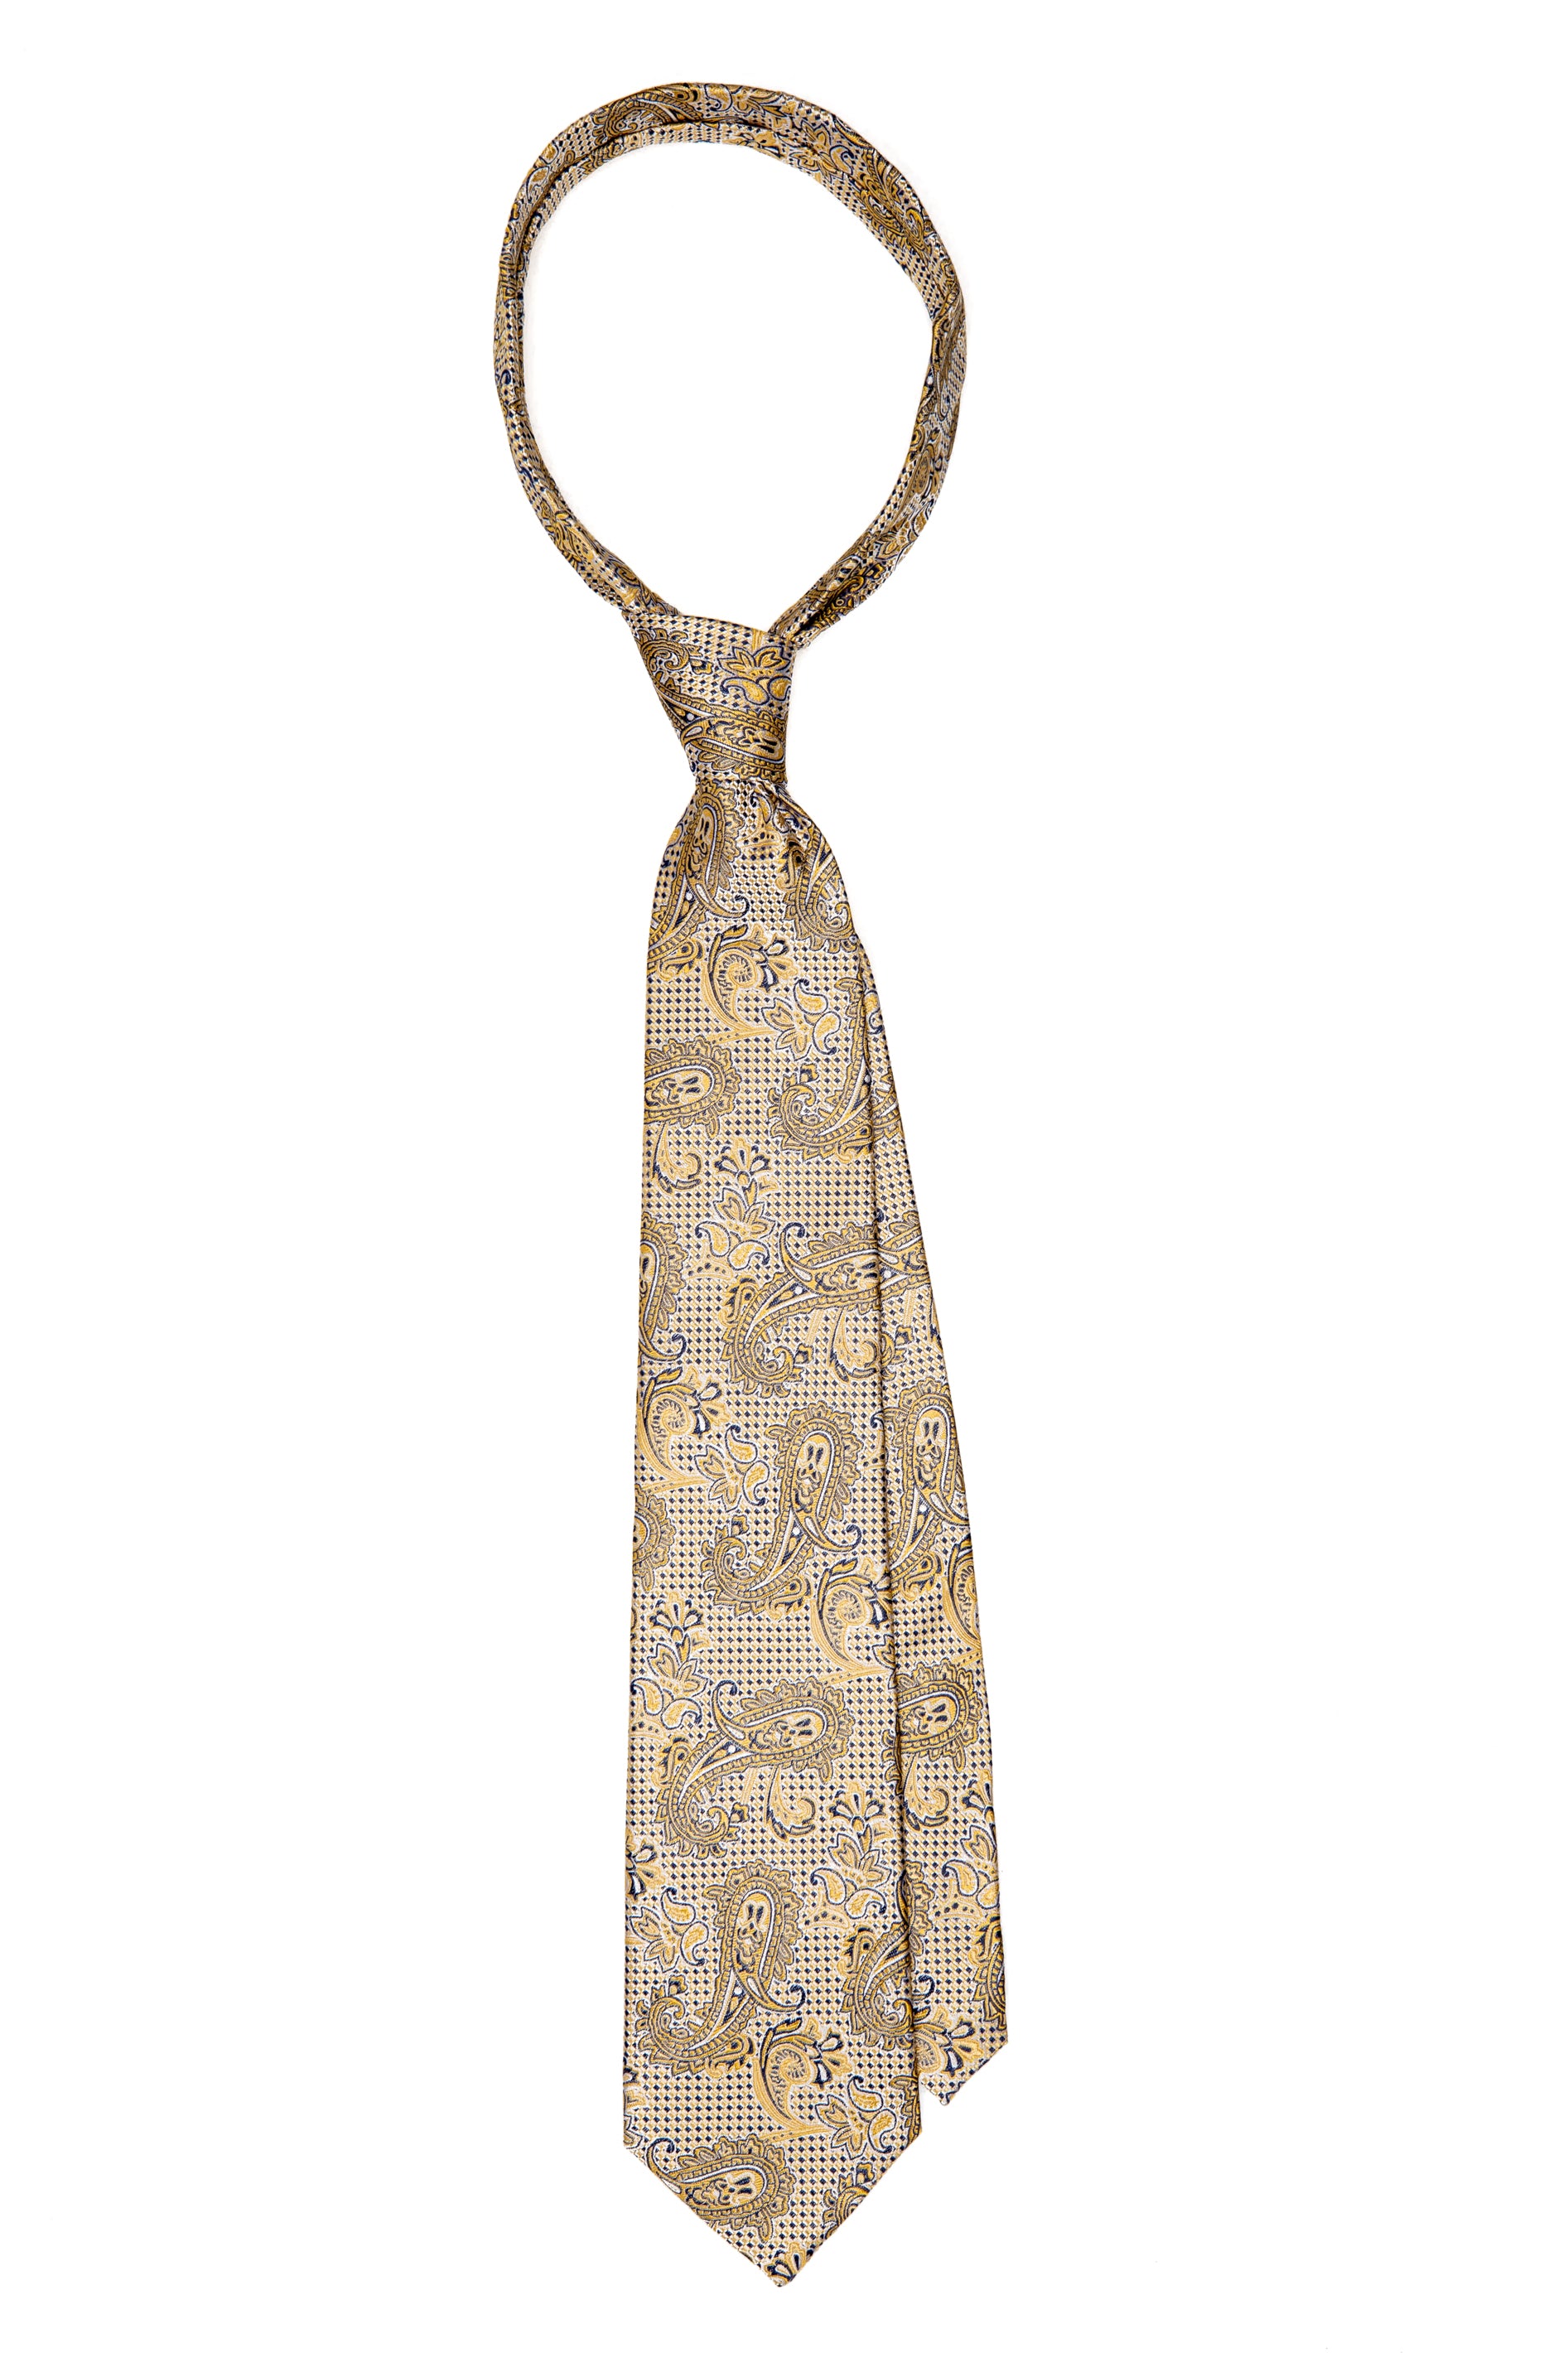 Cravatta in seta panna con stampa paisley dorata